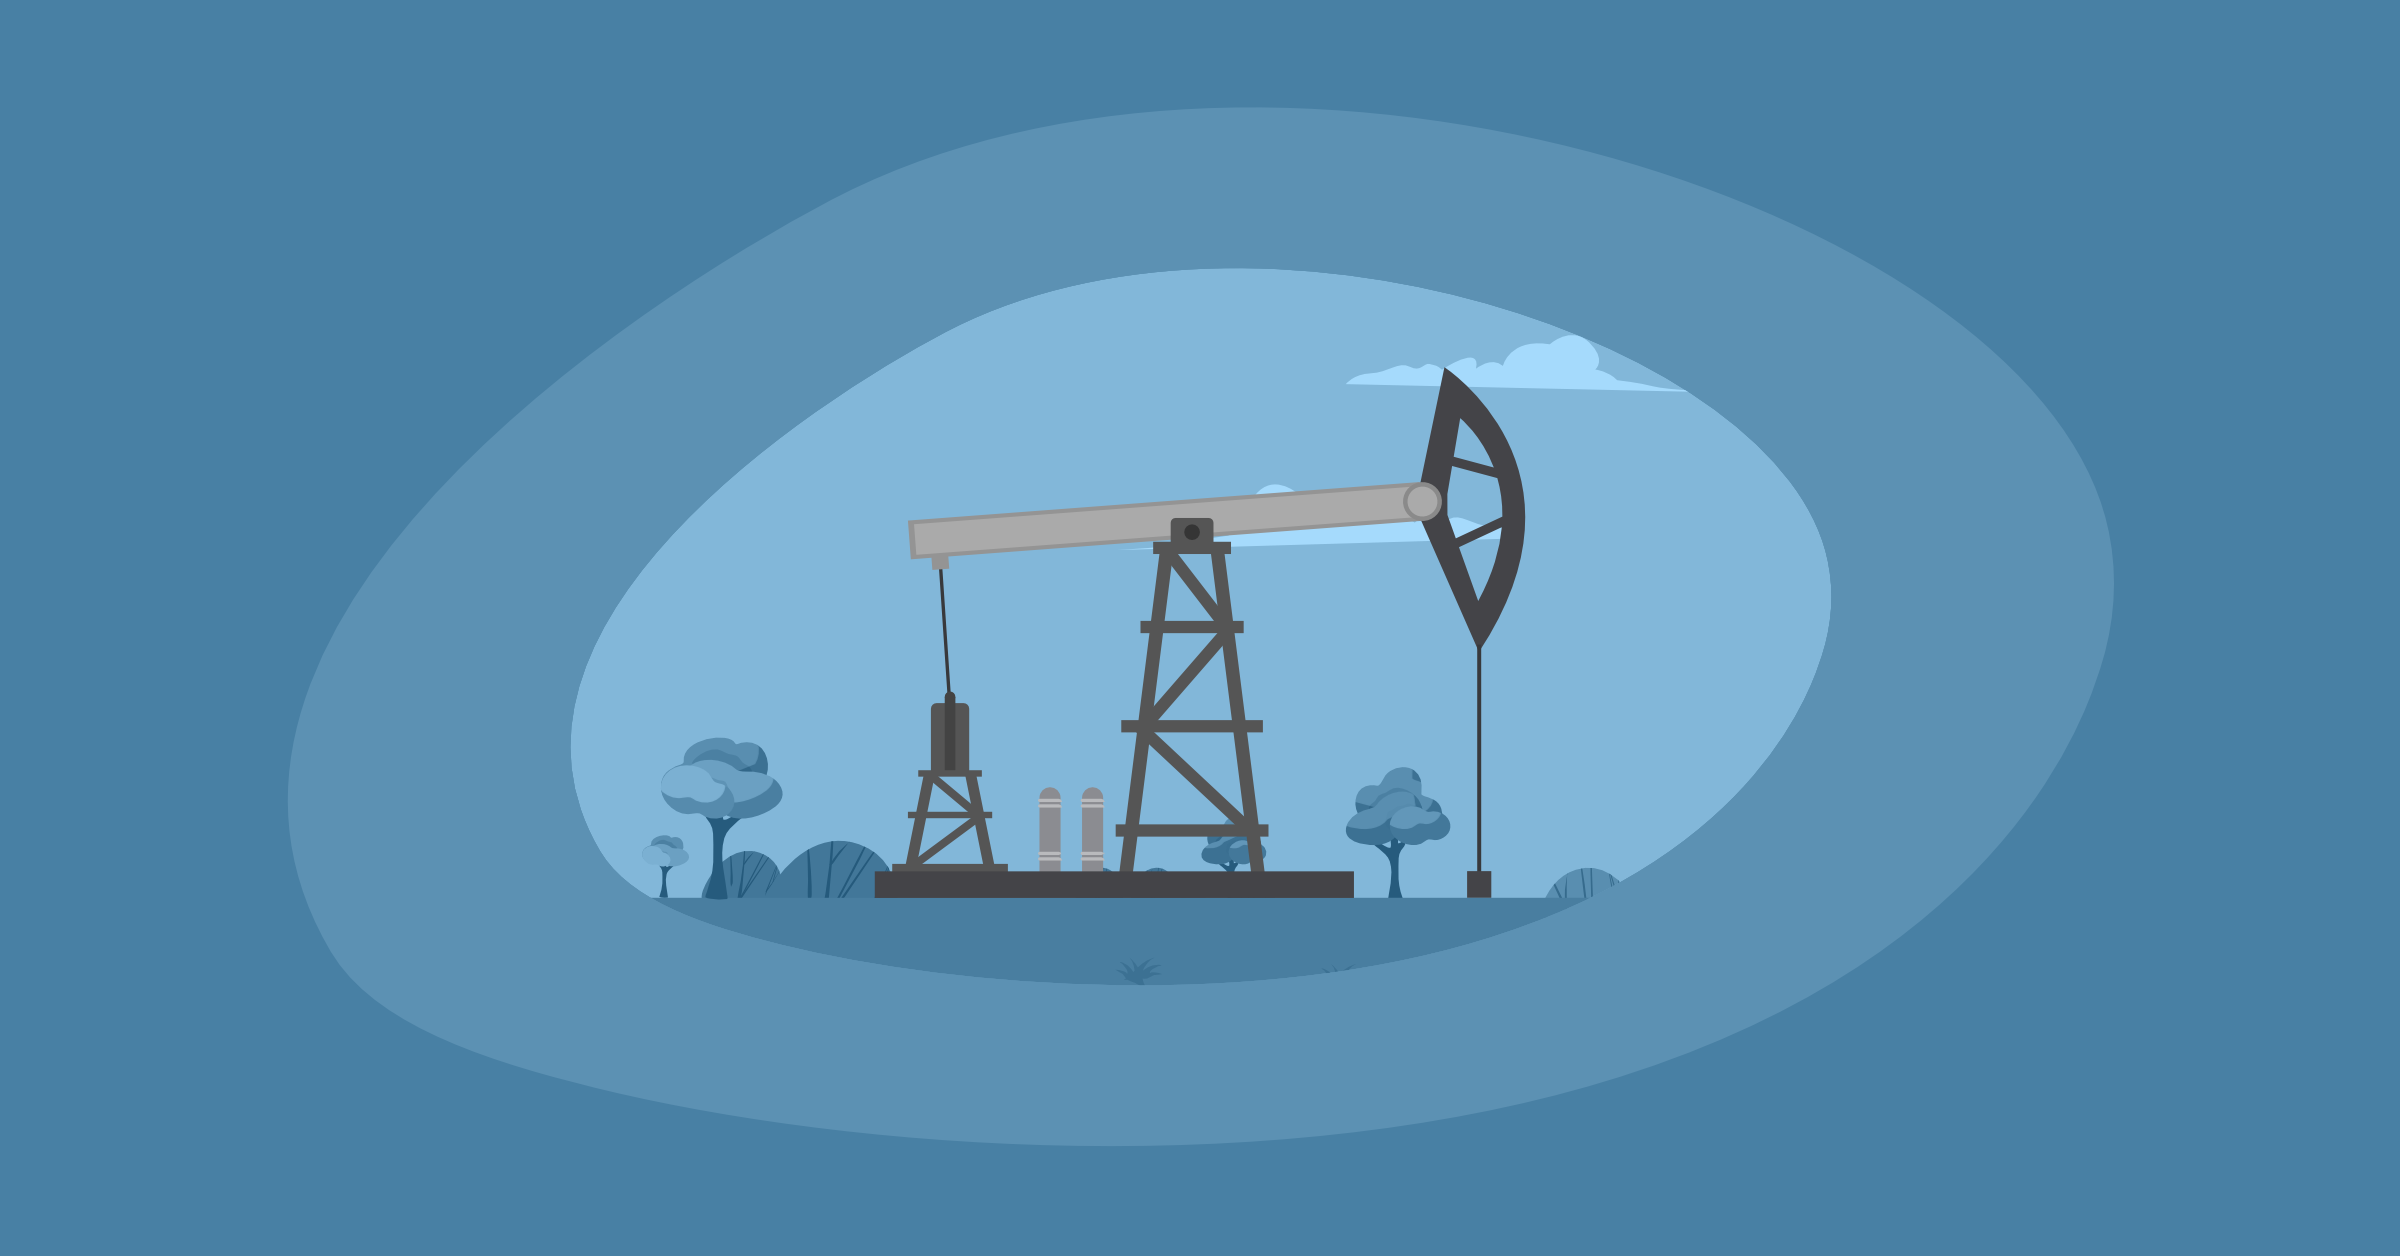 Illustration of an oil energy plant